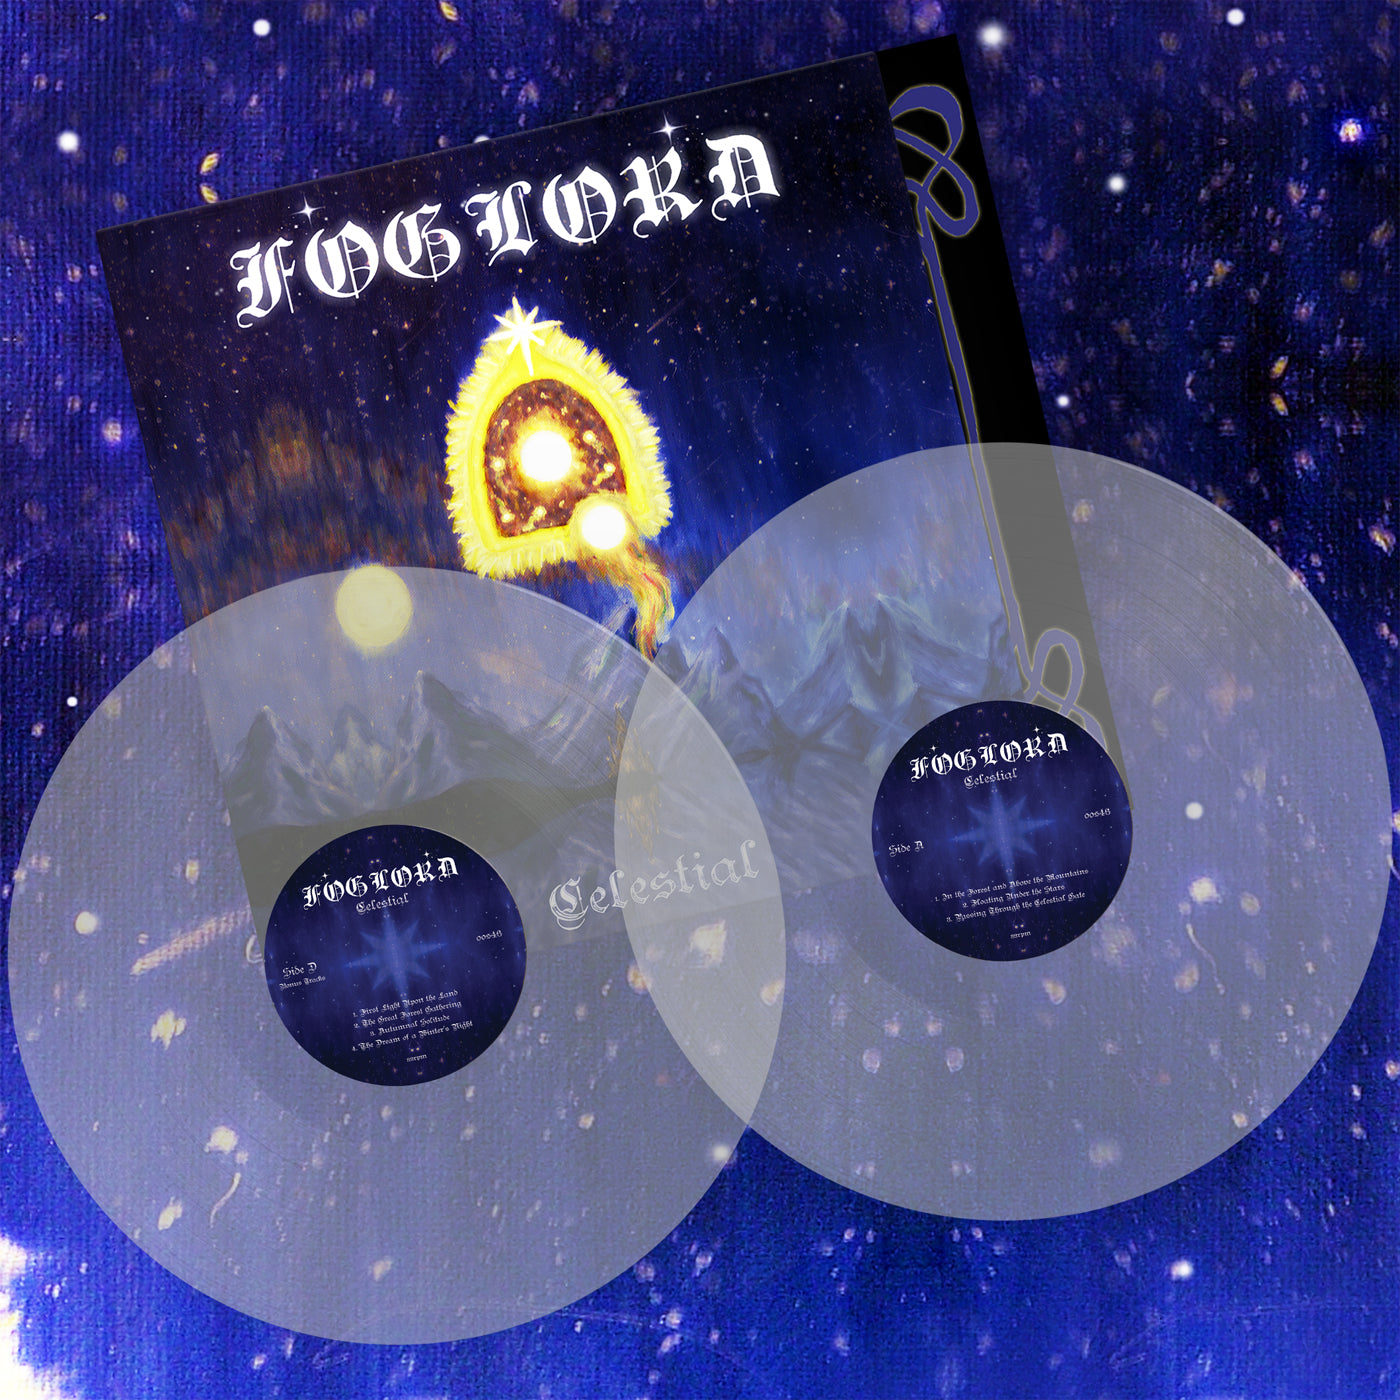 FOGLORD "Celestial" vinyl 2xLP (clear double LP w/insert, bonus tracks)